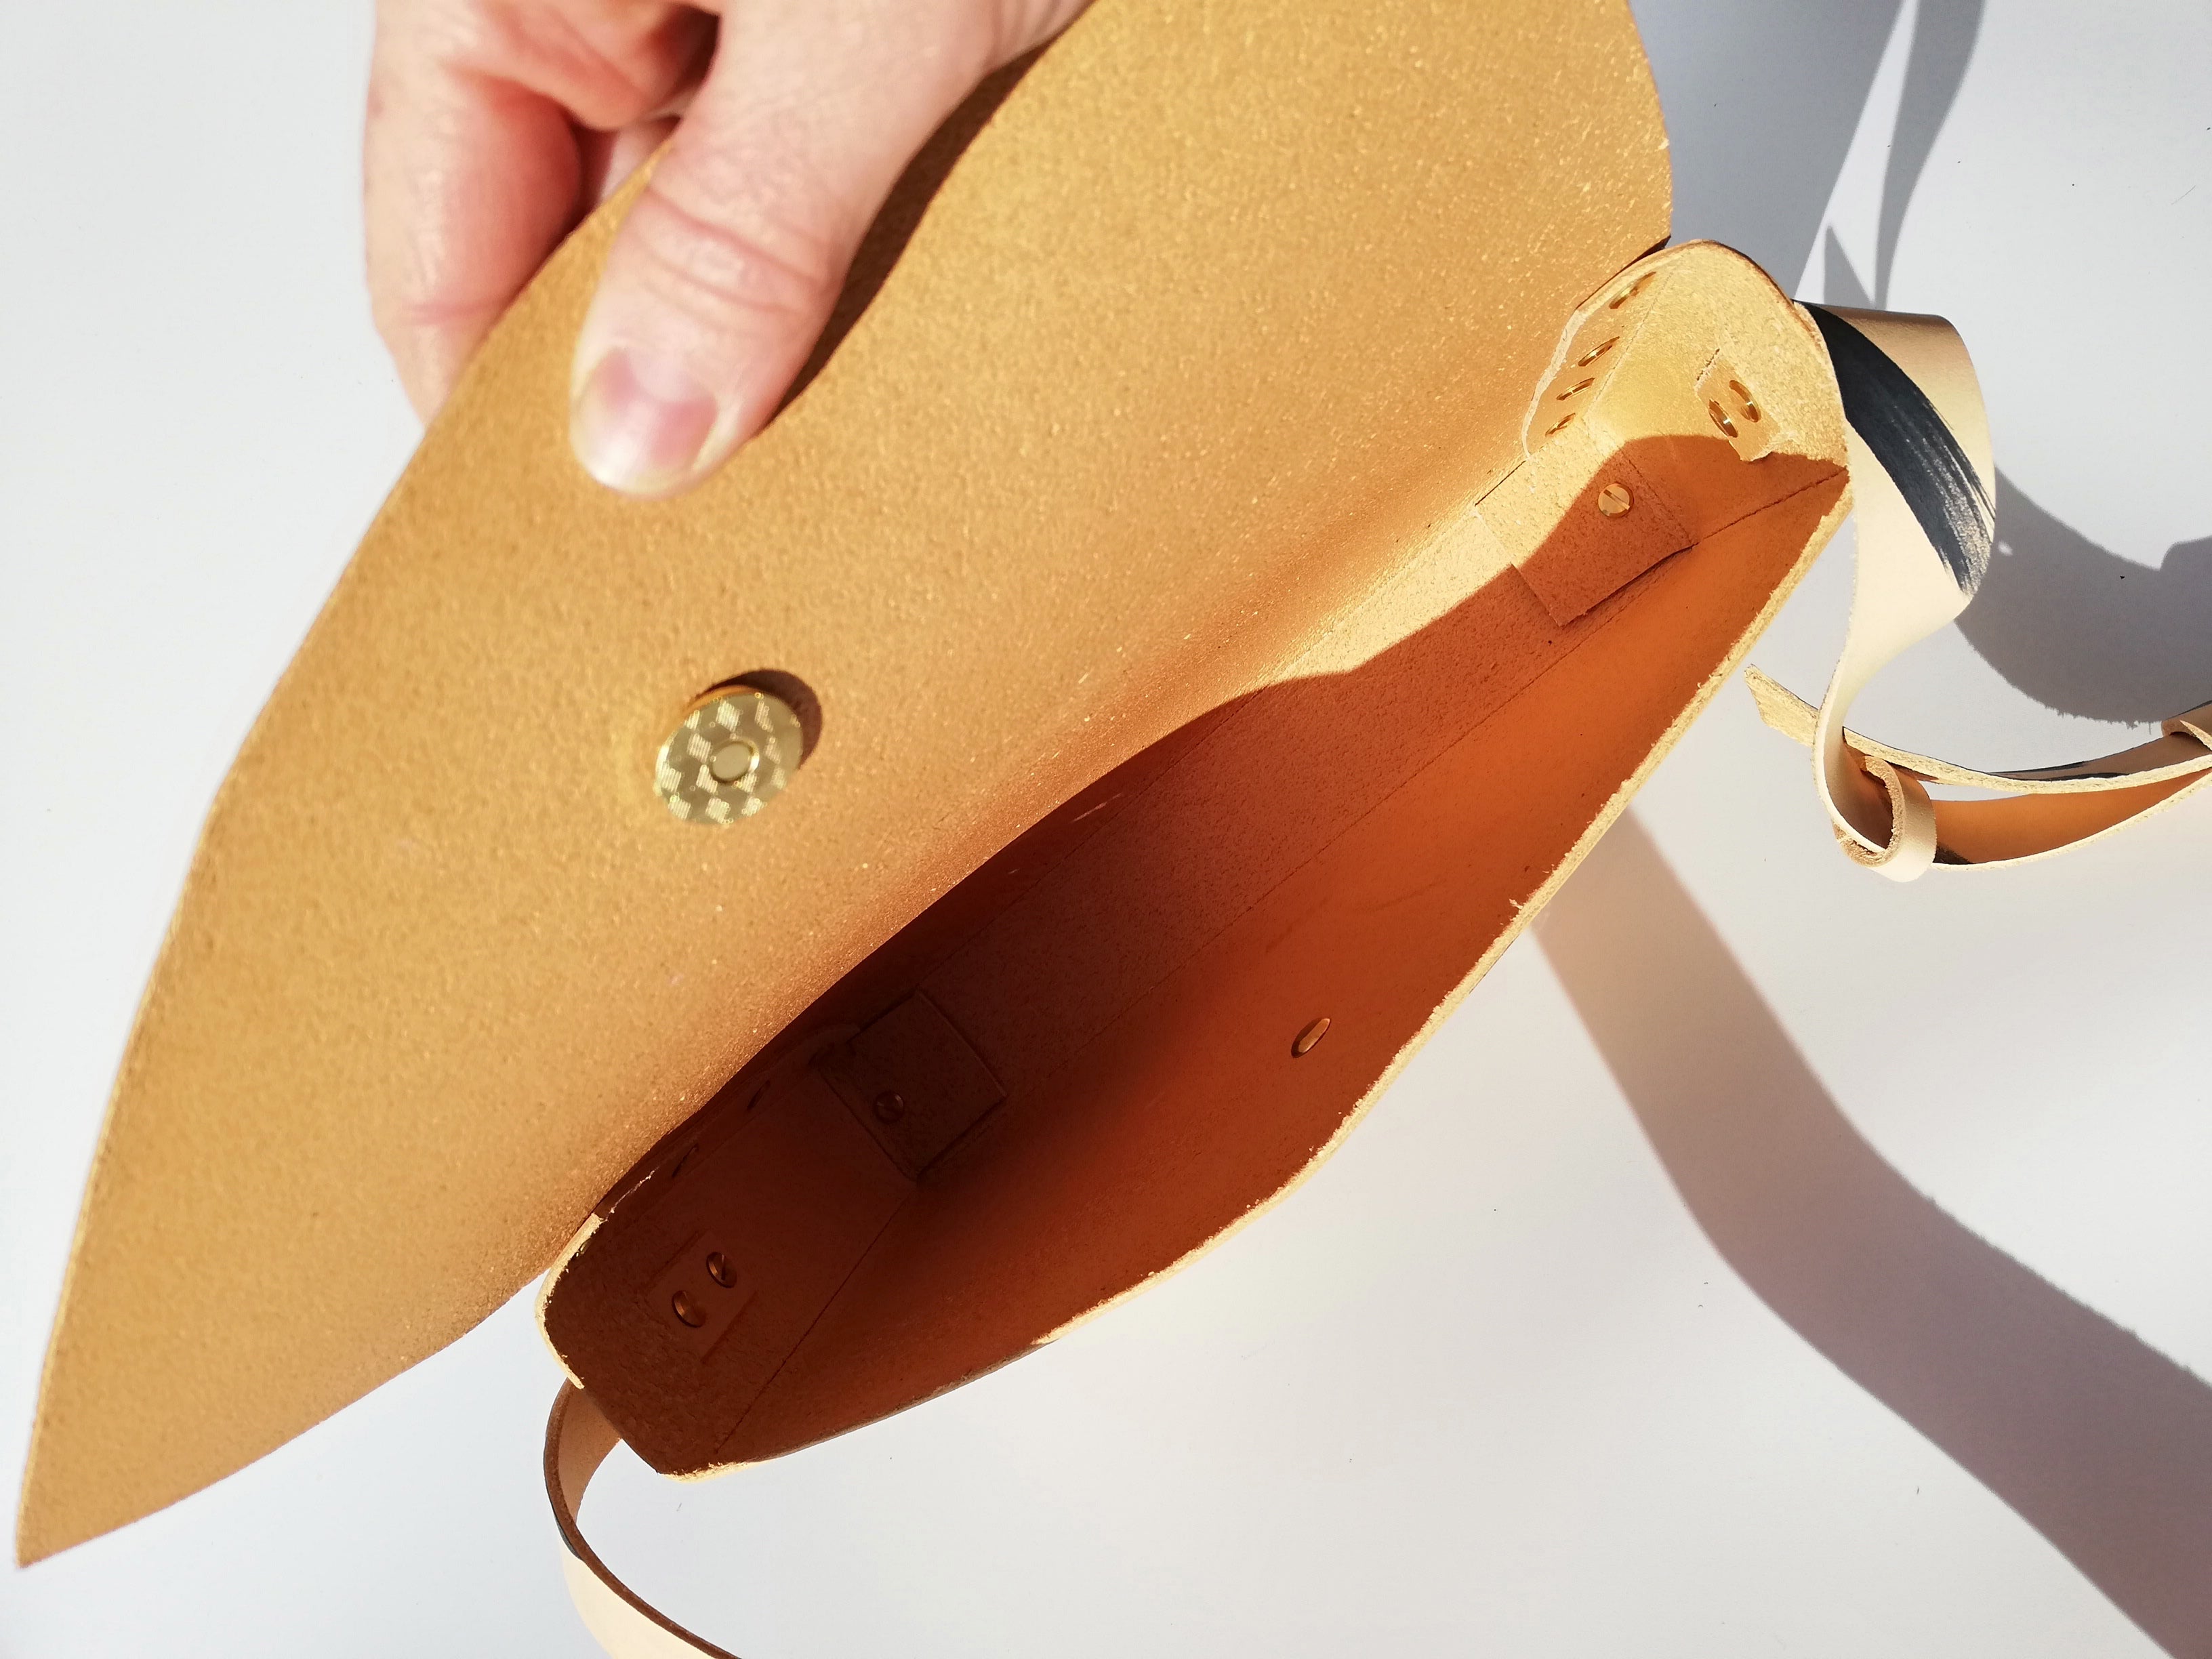 Large Handmade Leather Stitchless Satchel Shoulder Bag - Colour Options Available